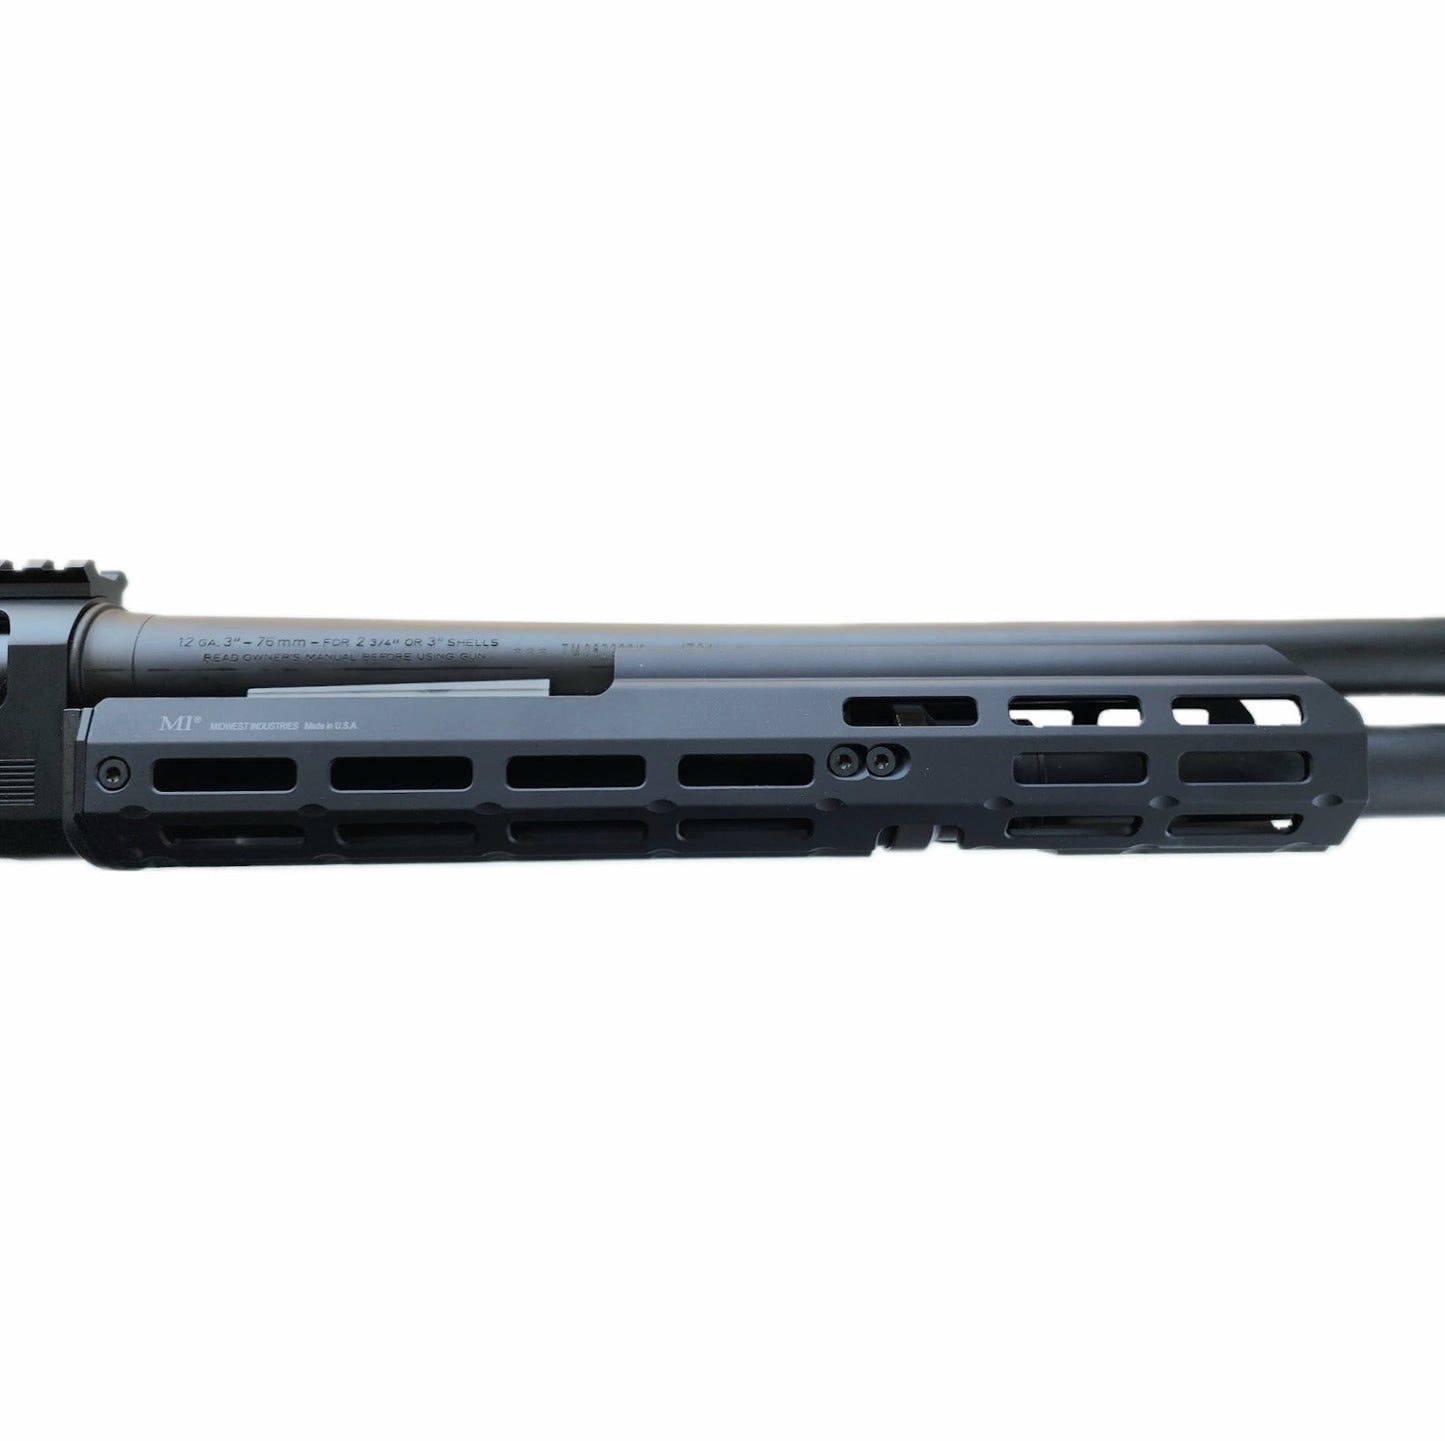 Benelli M4 Handguard on shotgun